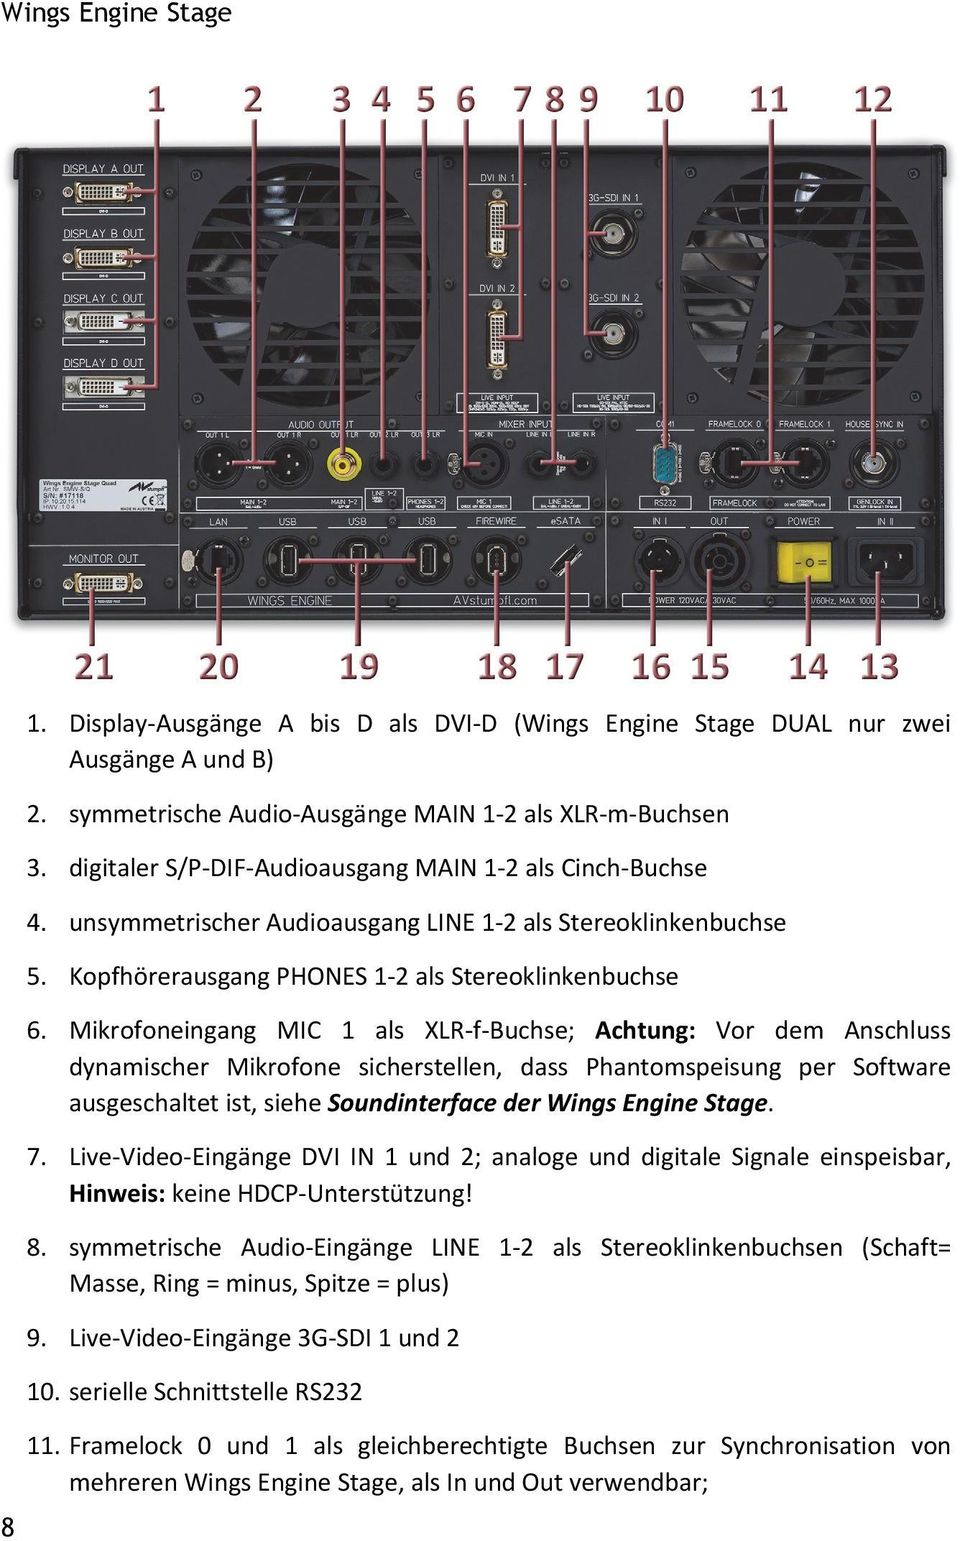 Mikrofoneingang MIC 1 als XLR f Buchse; Achtung: Vor dem Anschluss dynamischer Mikrofone sicherstellen, dass Phantomspeisung per Software ausgeschaltet ist, siehe Soundinterface der Wings Engine